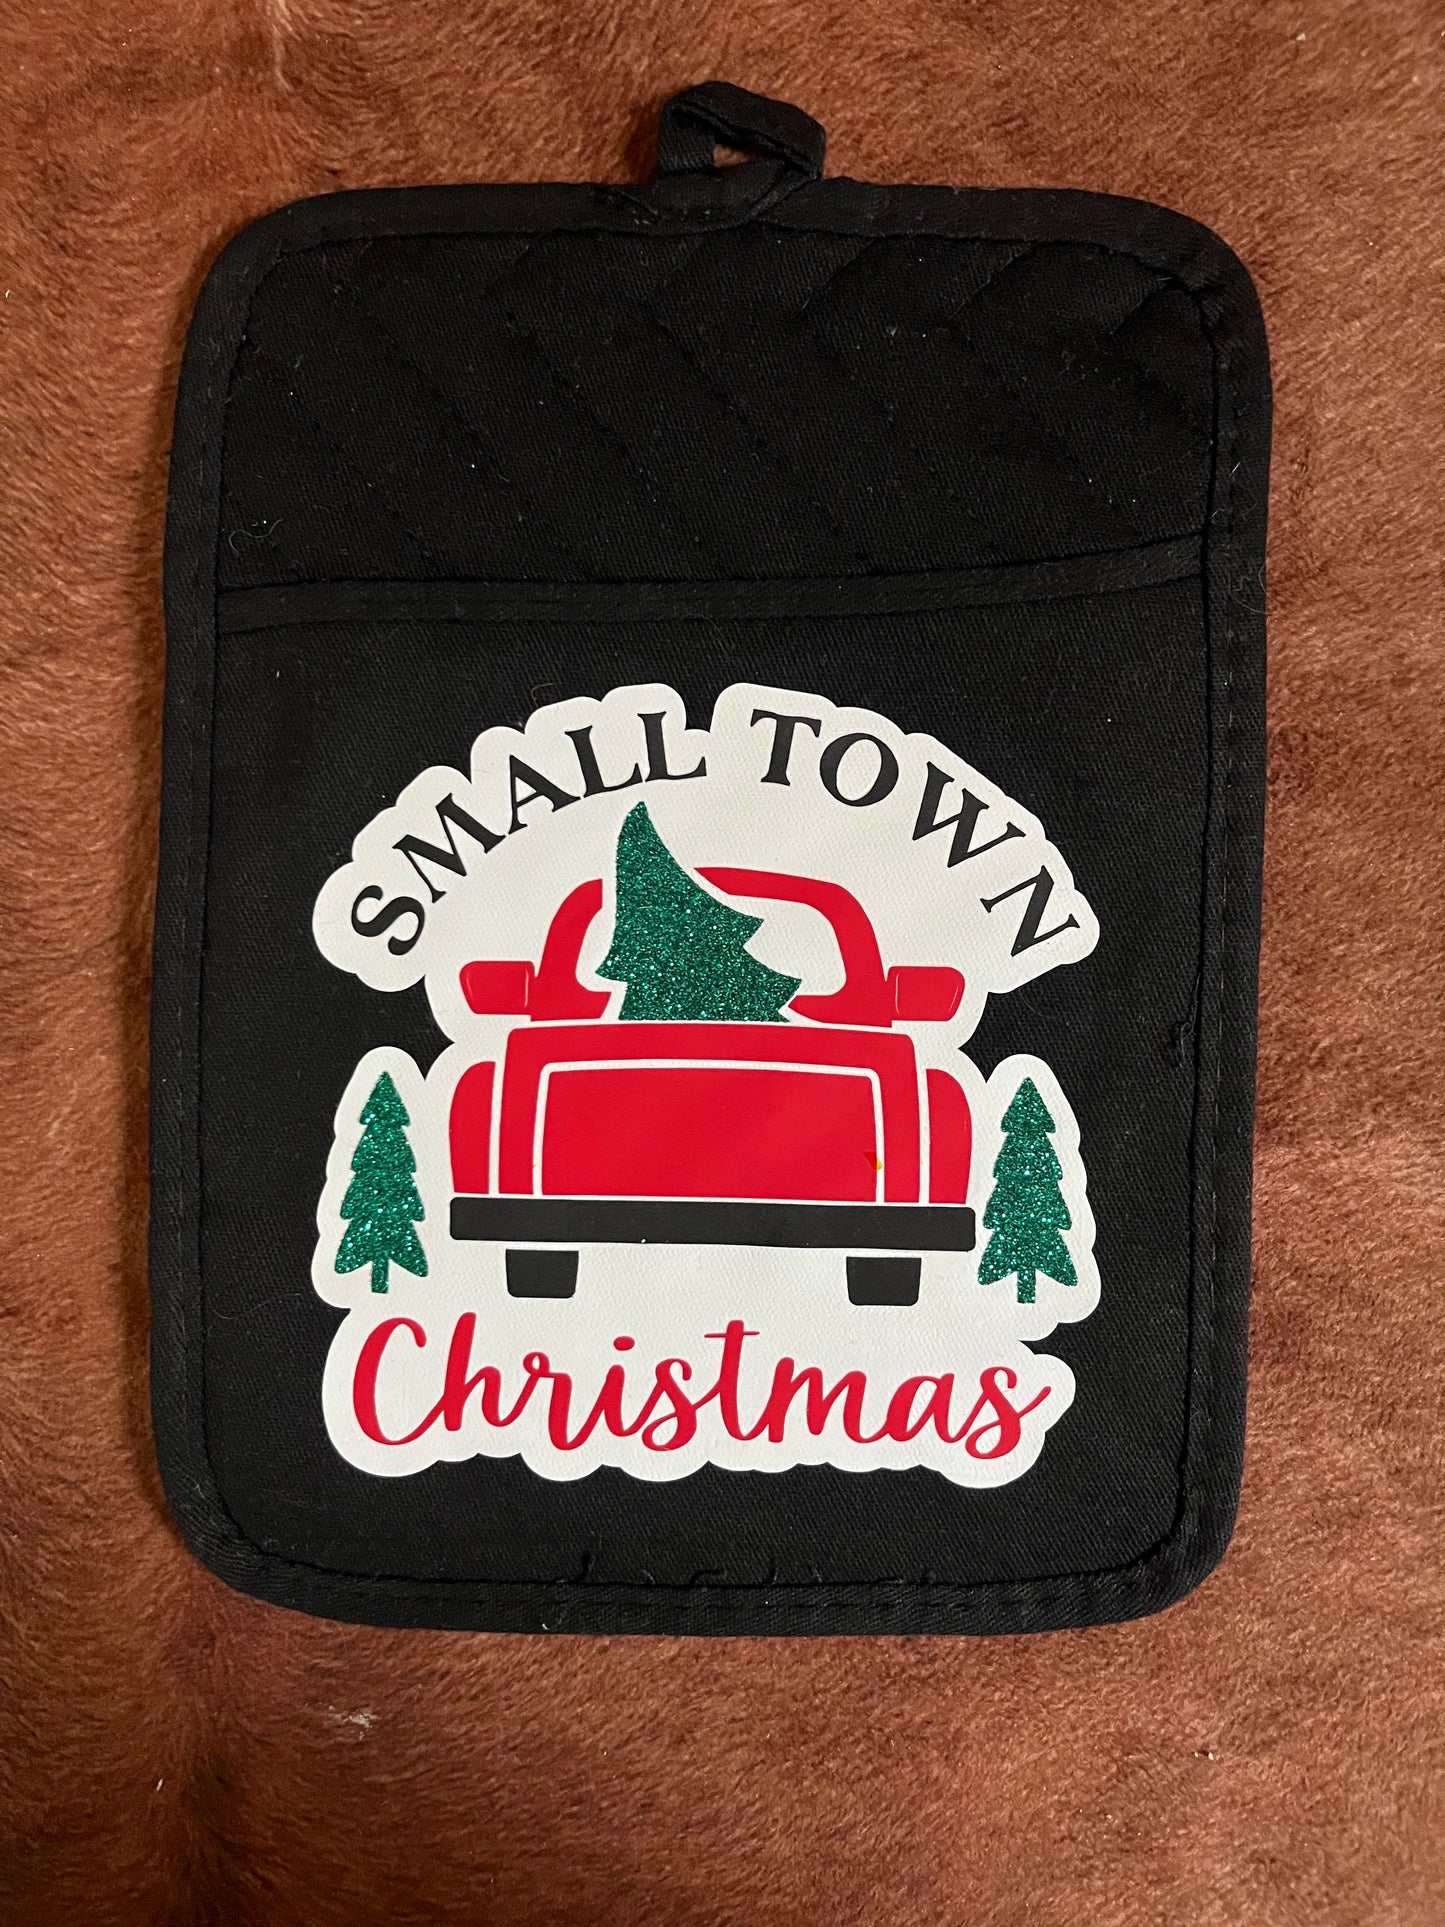 Small Town Christmas Pot Holder